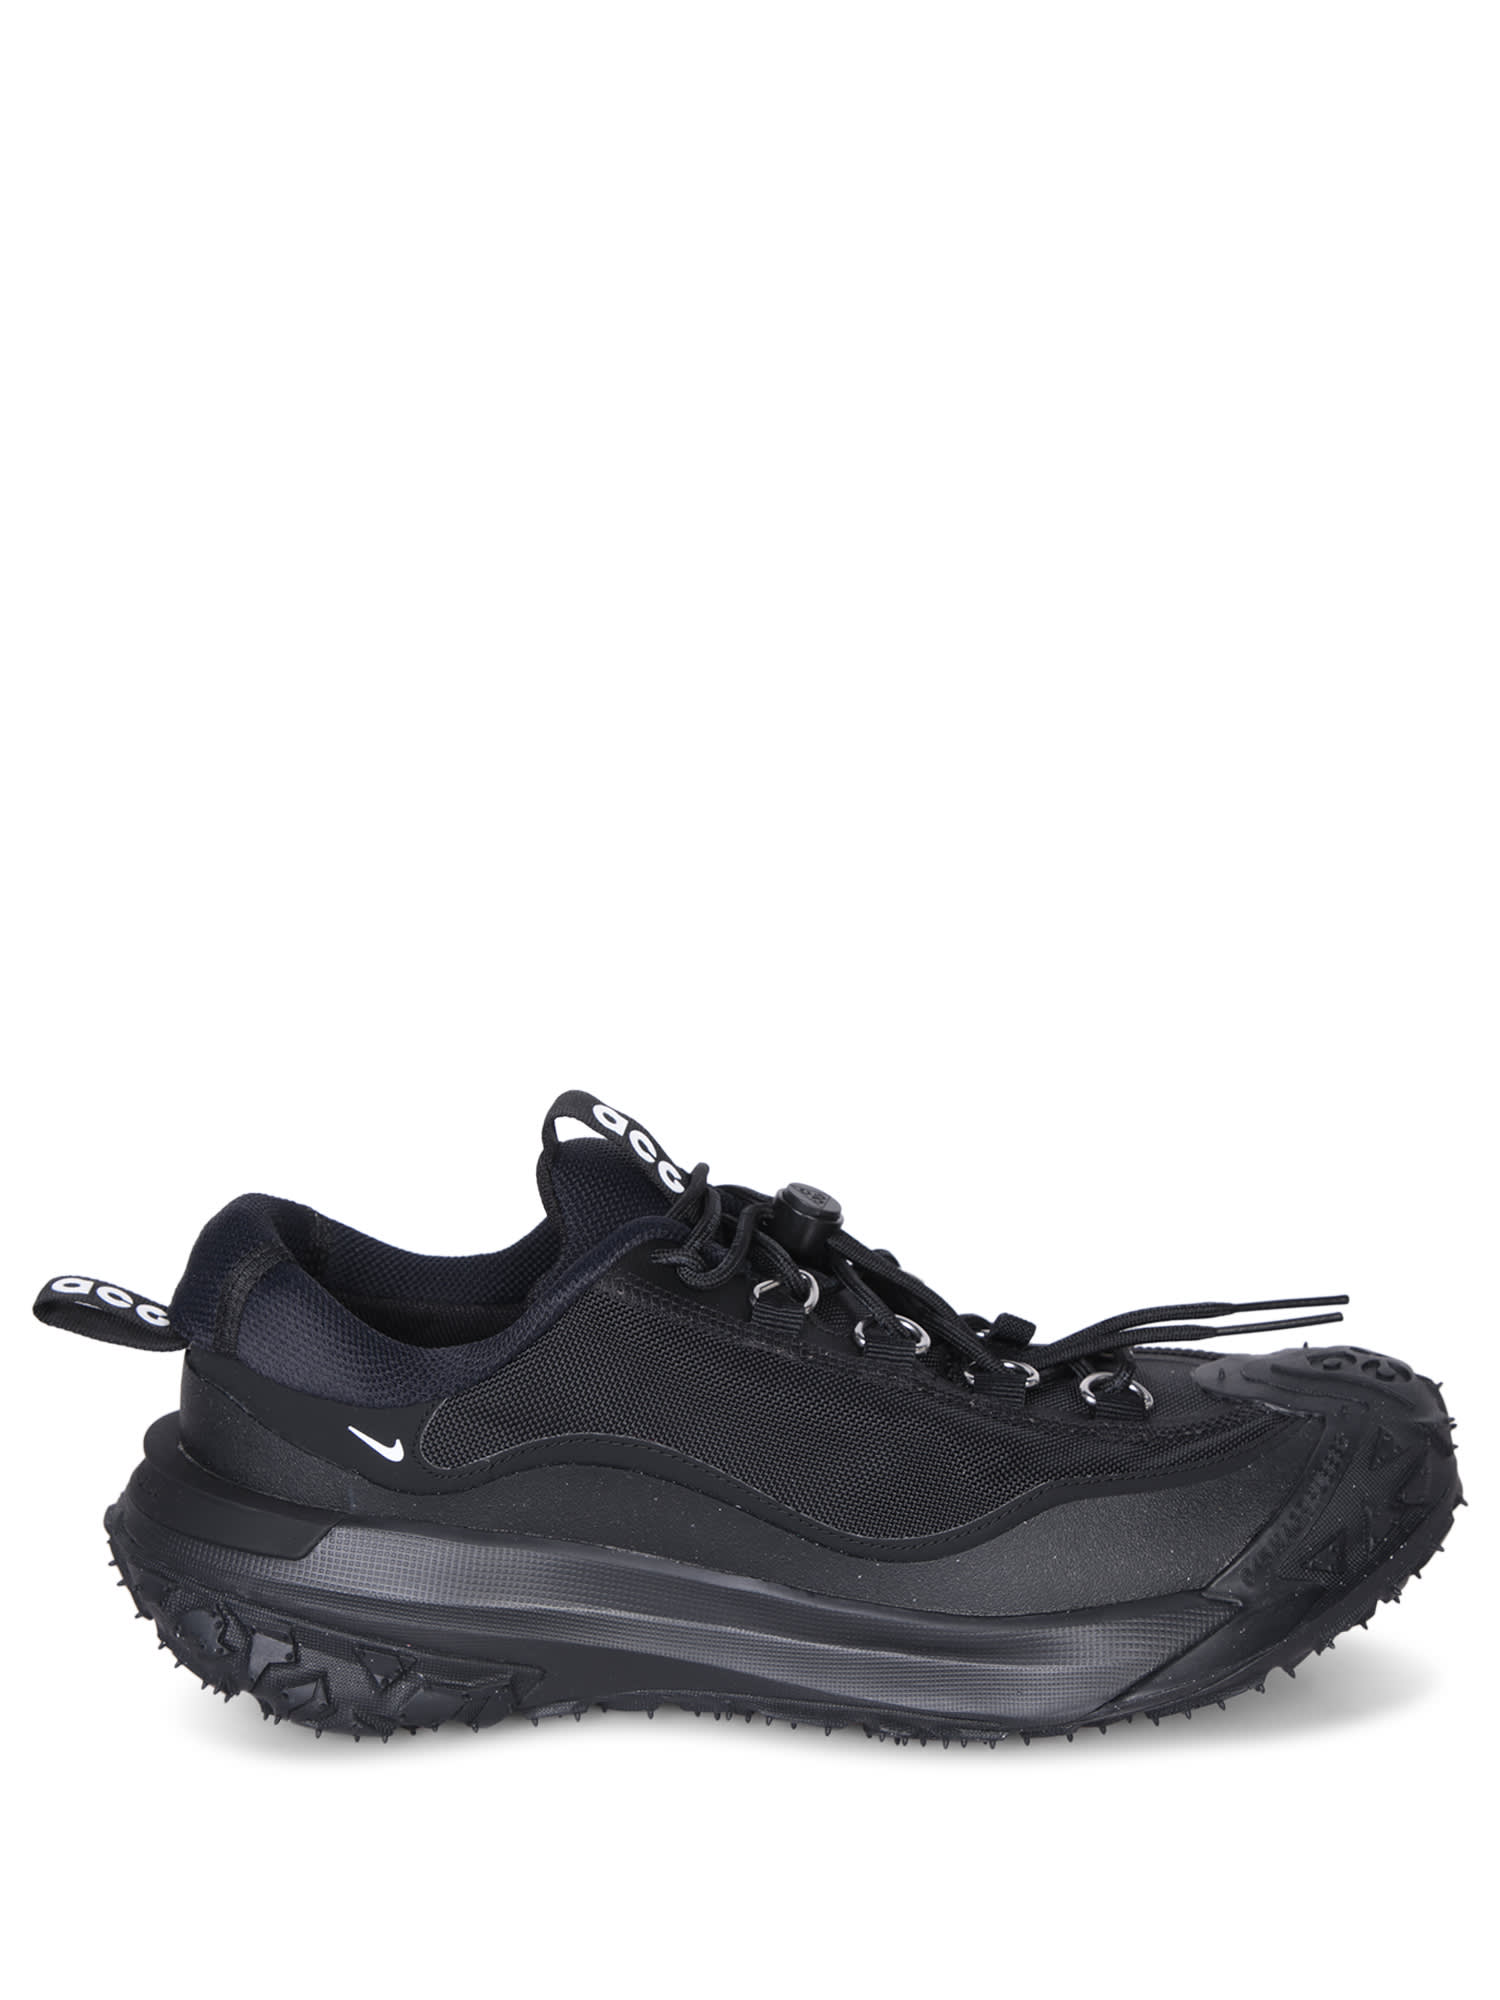 Acg Mountain Black Sneakers